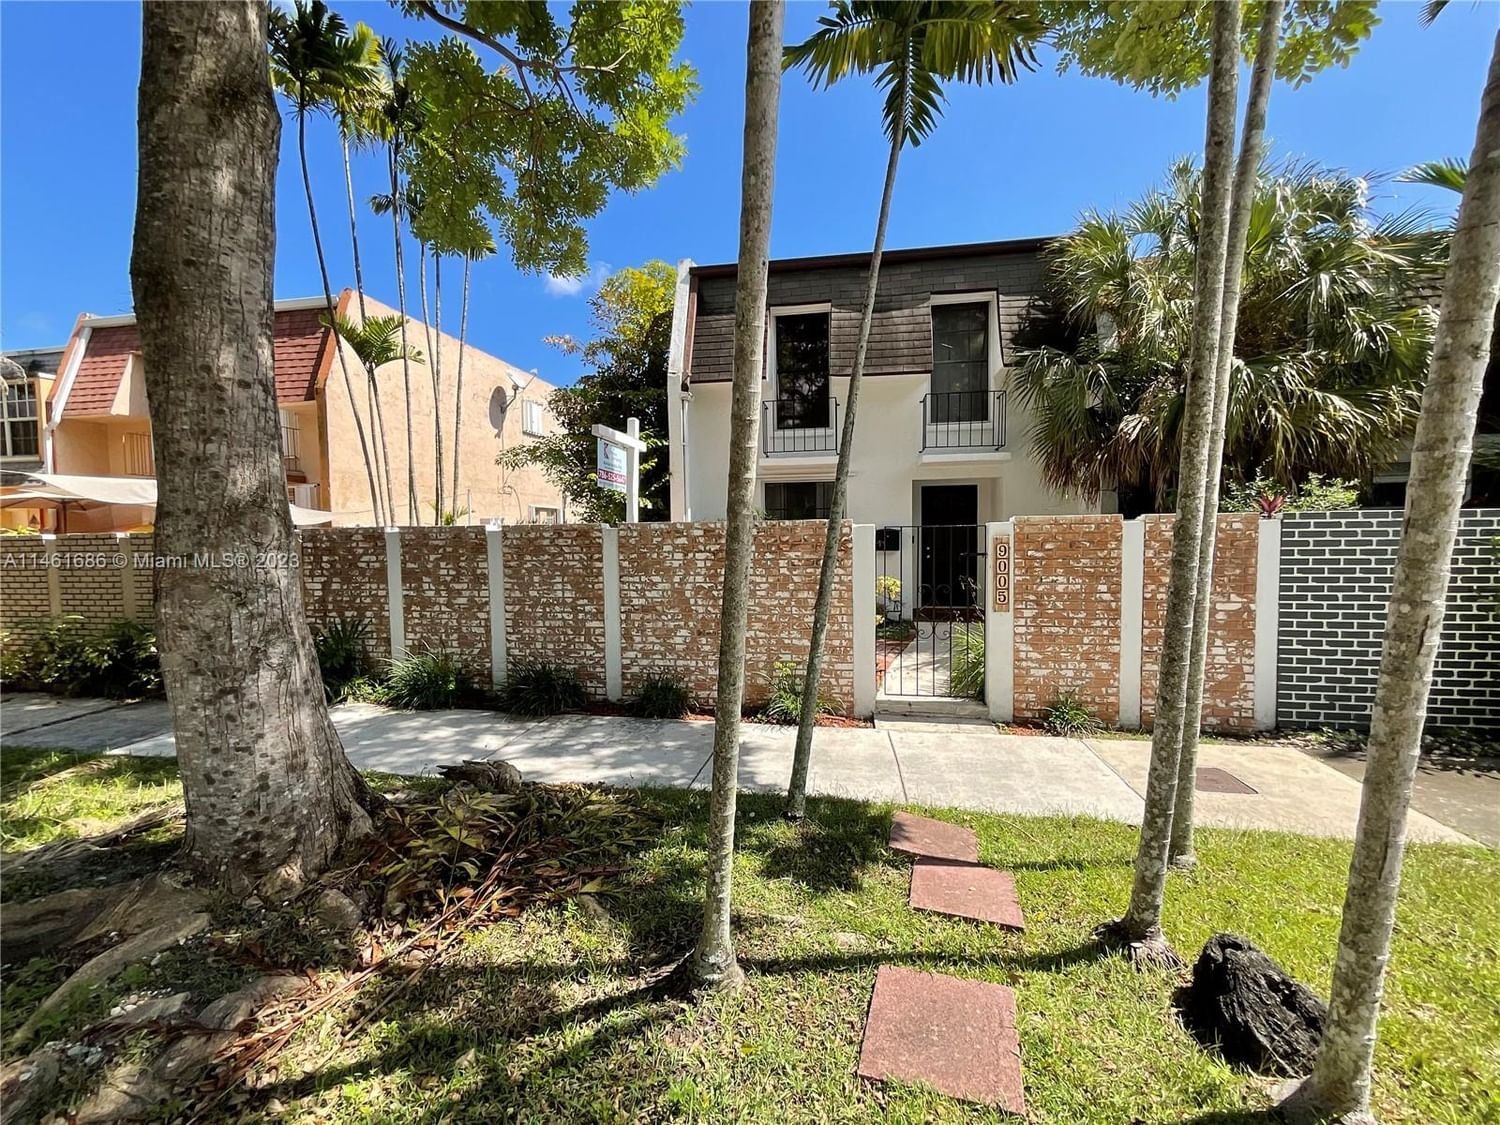 Real estate property located at 9005 96th Ave, Miami-Dade County, Miami, FL